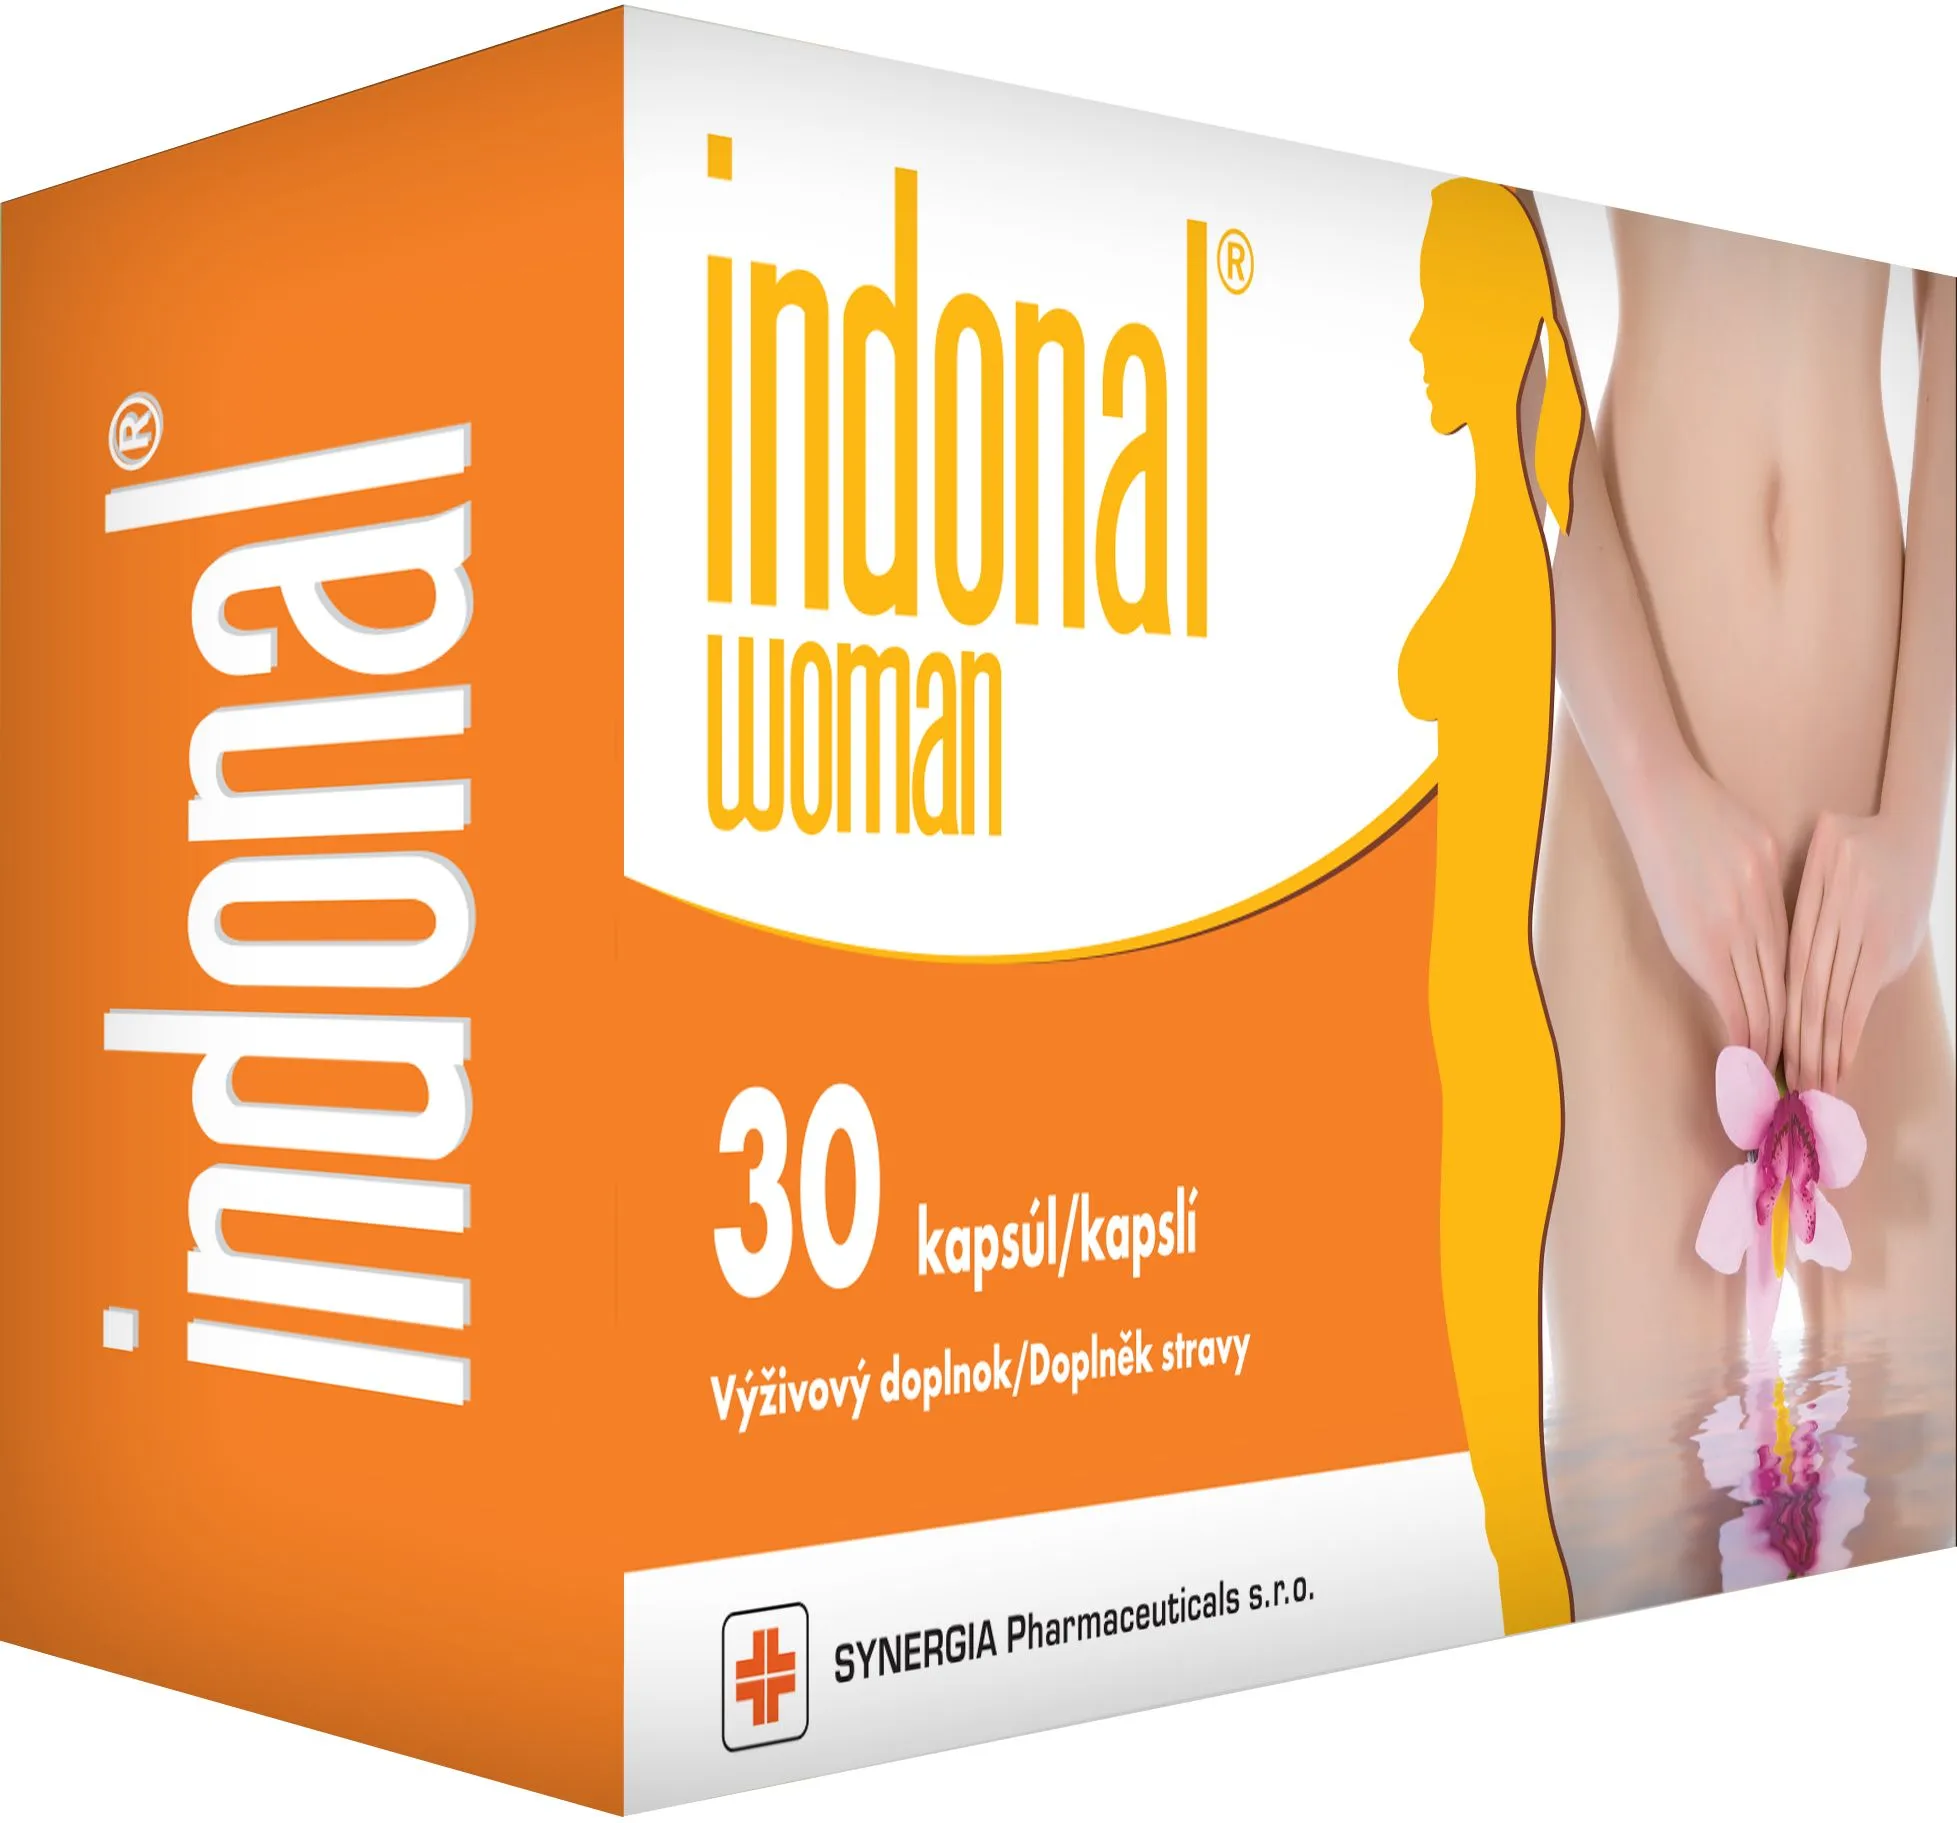 Indonal Woman